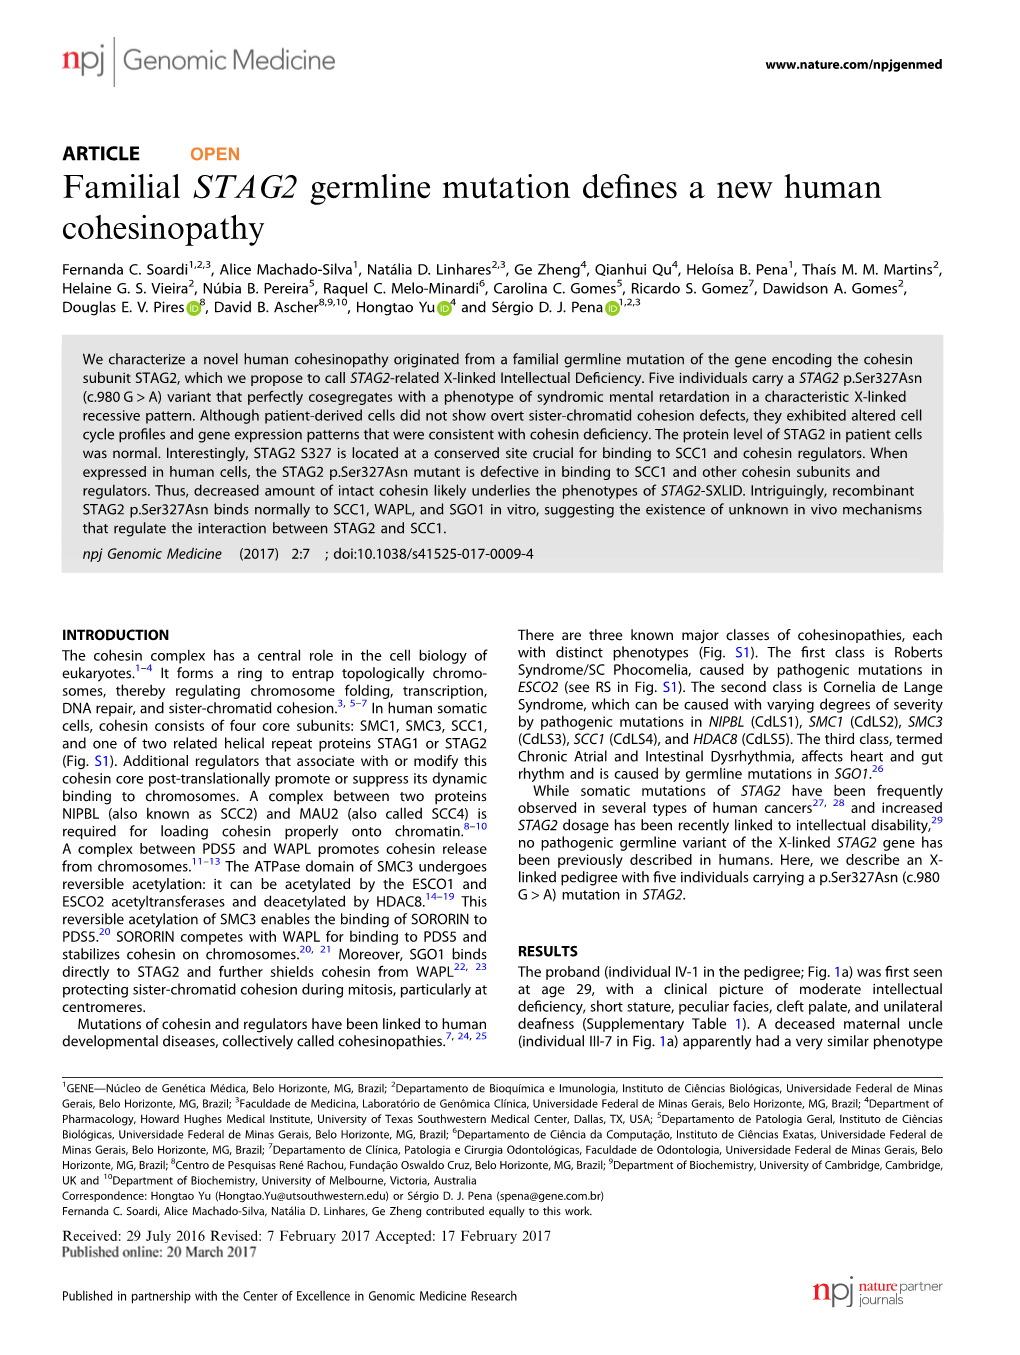 Familial STAG2 Germline Mutation Defines a New